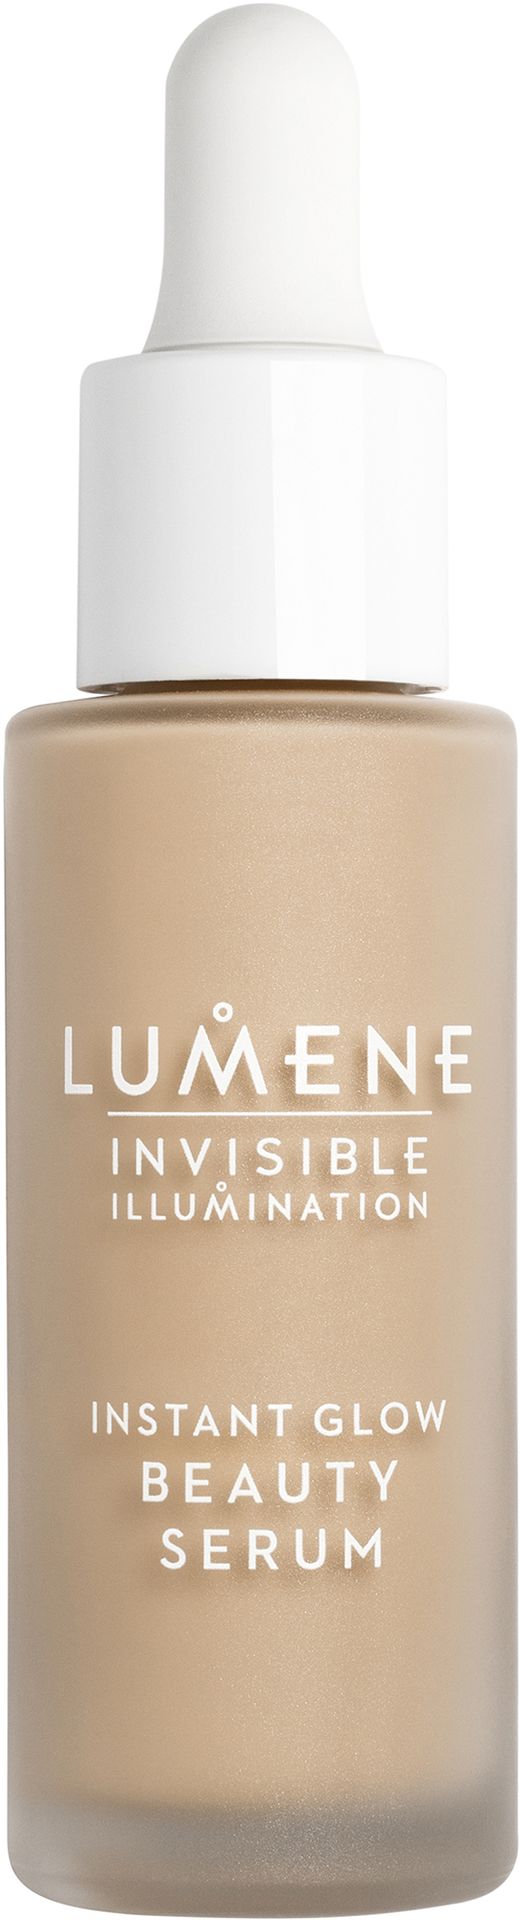 Lumene Invisible Illumination Instant Glow Beauty Serum Universal Medium (30ml)